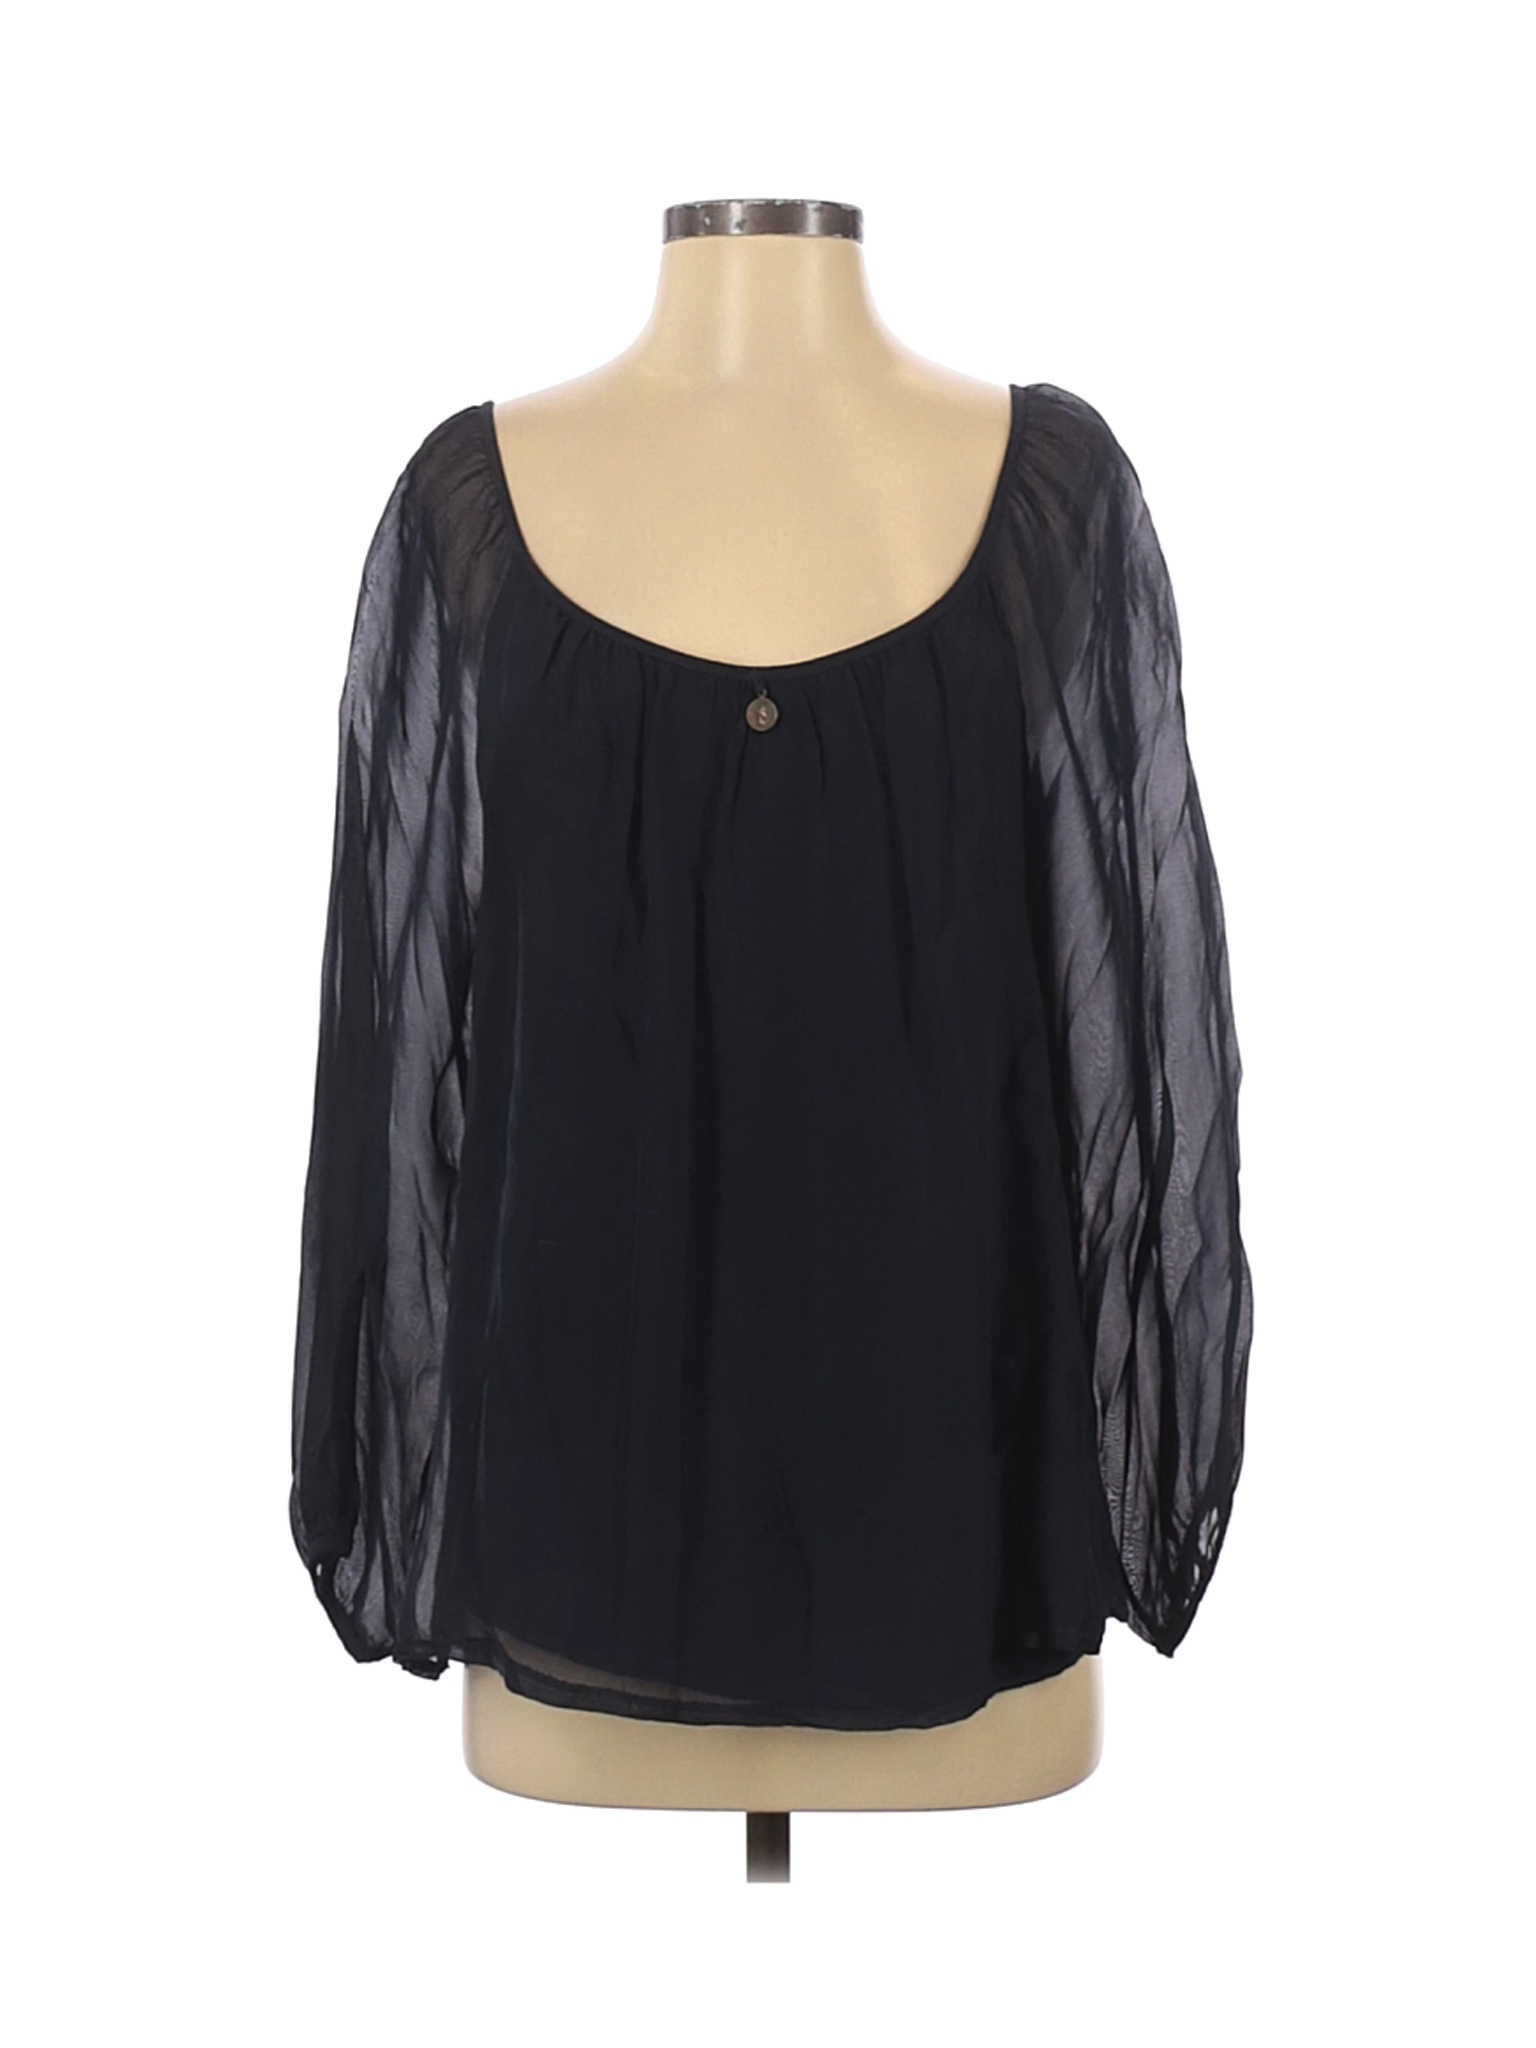 Tempo Paris Women Black Long Sleeve Blouse S | eBay